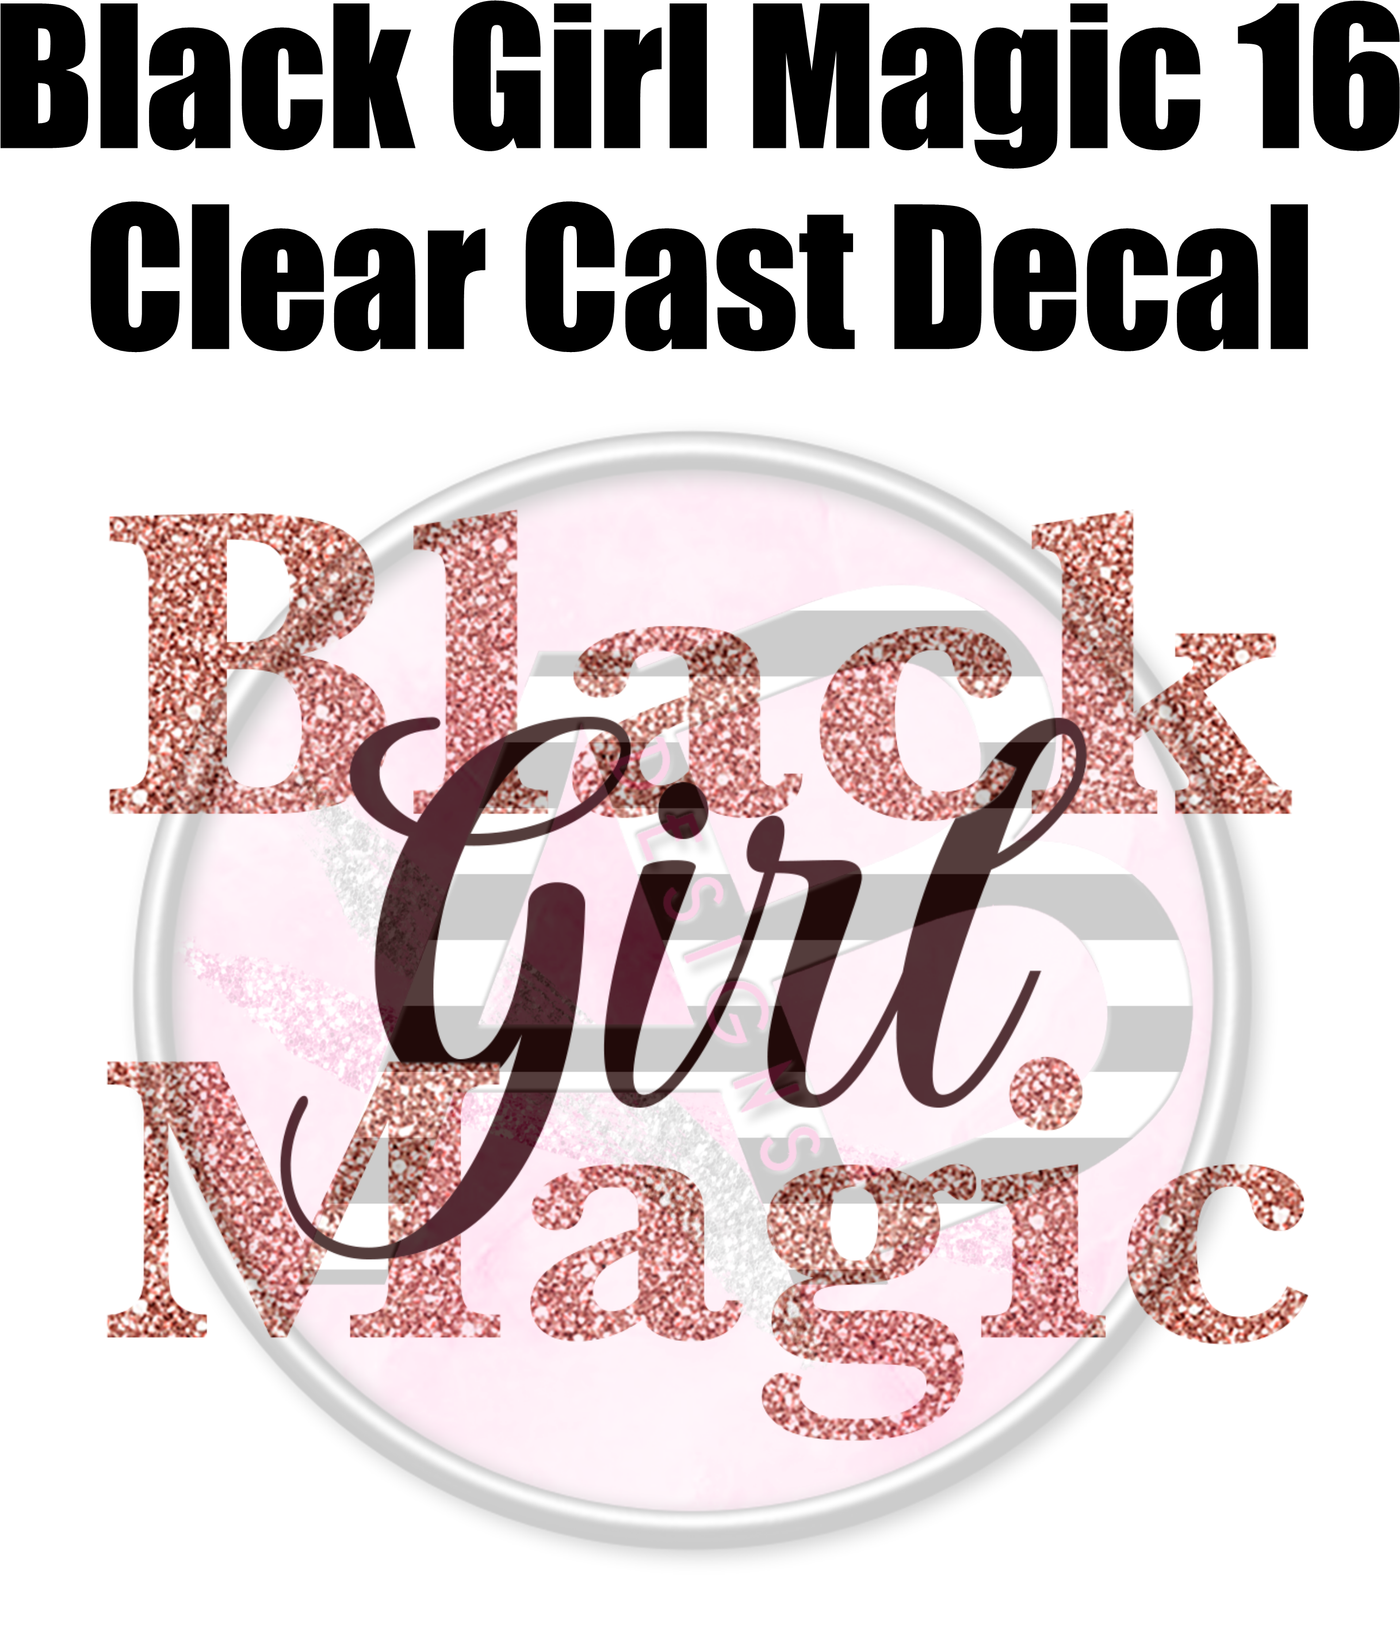 Black Girl Magic 16 - Clear Cast Decal